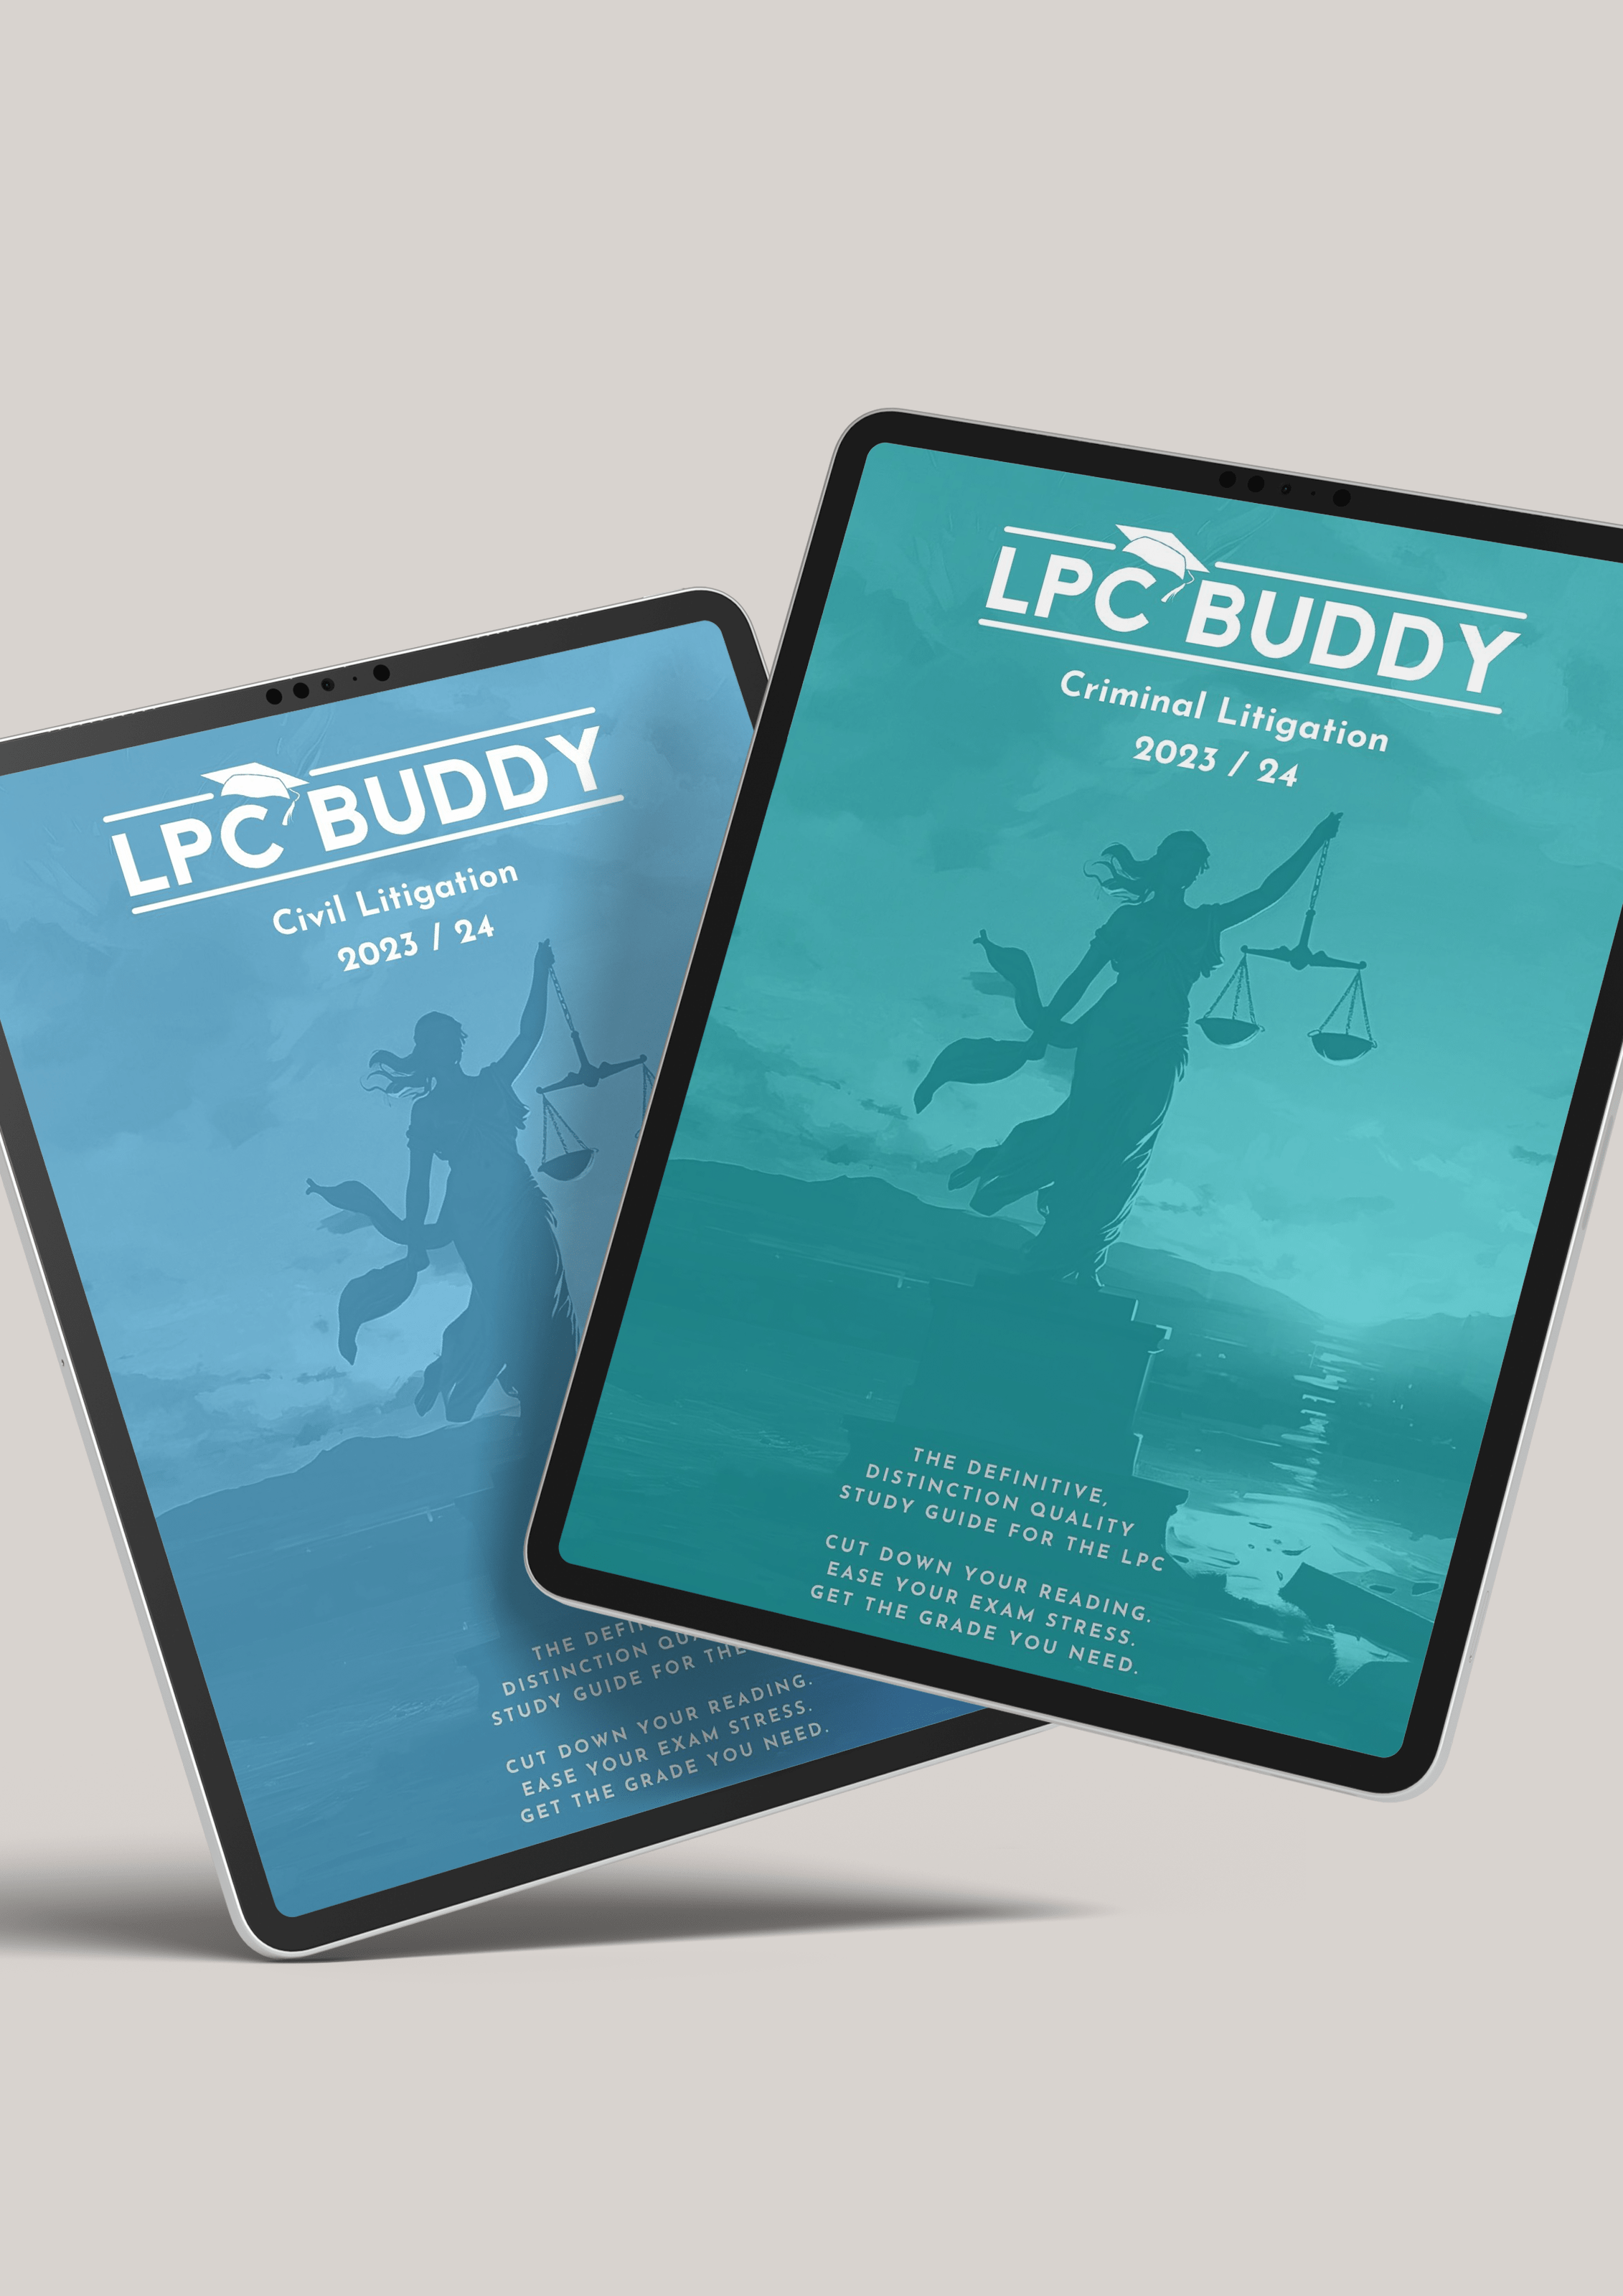 LPC Buddy™ 2023 / 24 | Dispute Resolution / Civil & Criminal Litigation | Digital Distinction Level Study Guide for the LPC